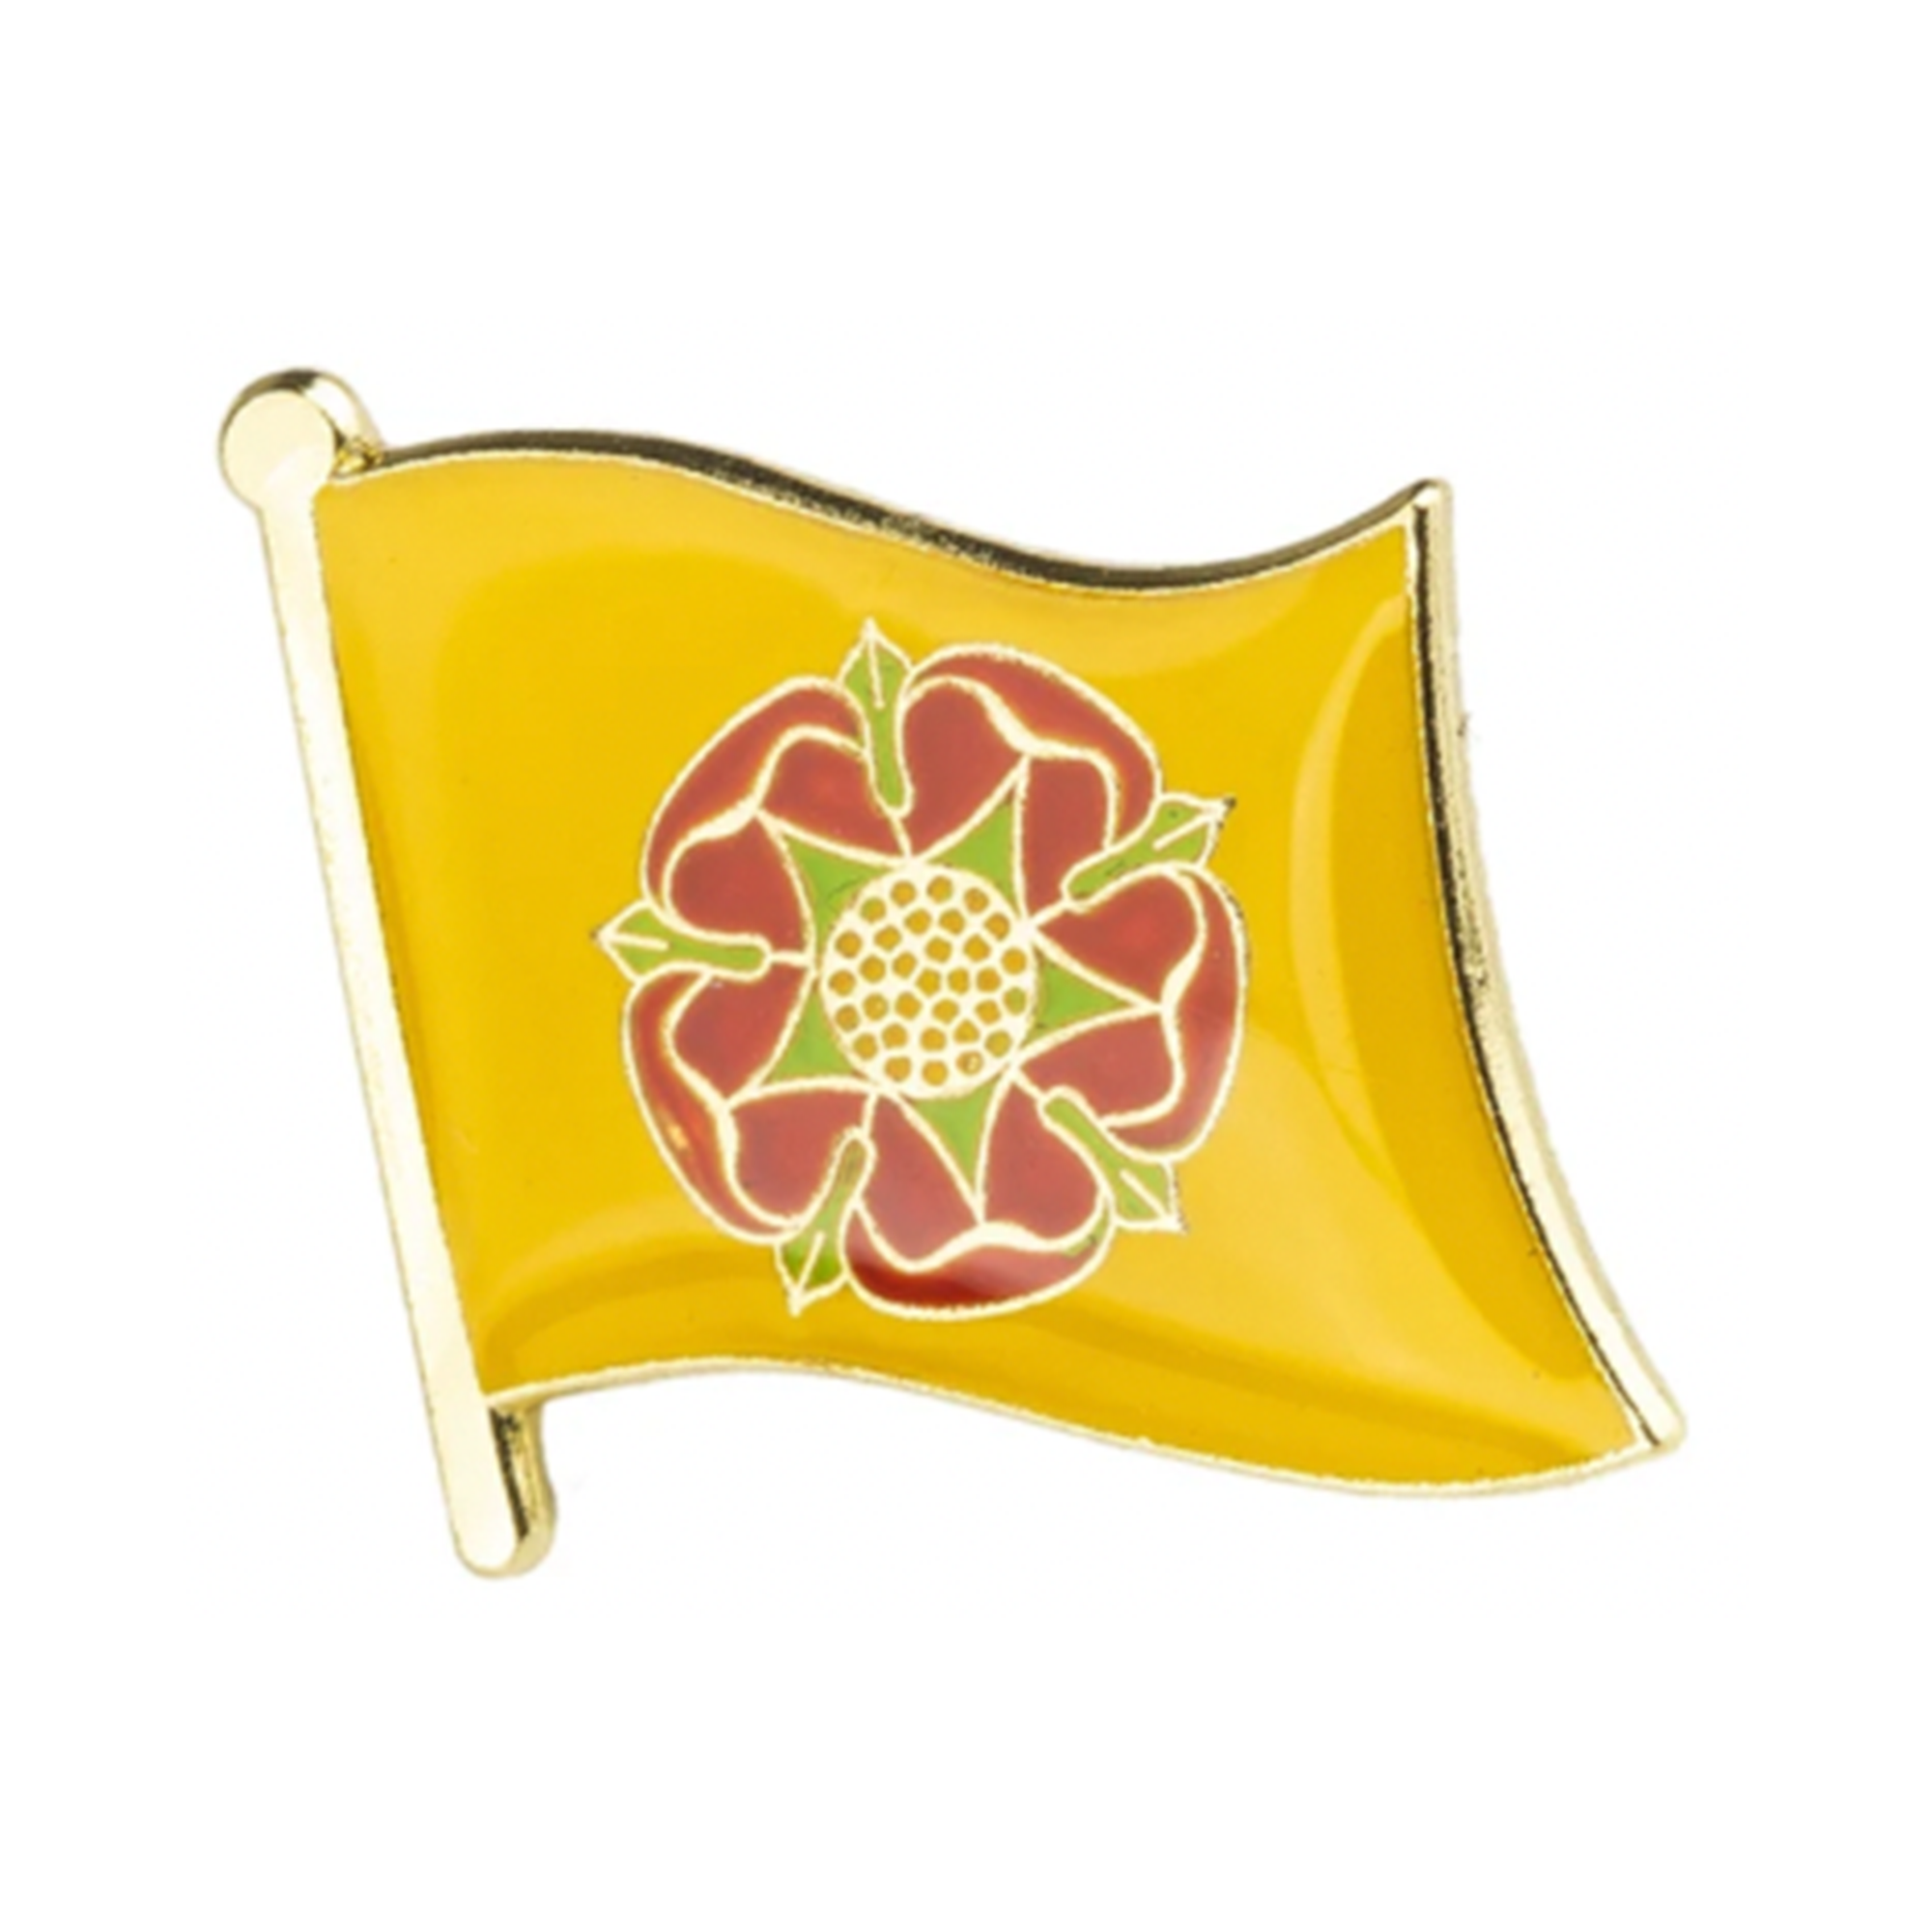 Lancaster English County Flag Pin Badge